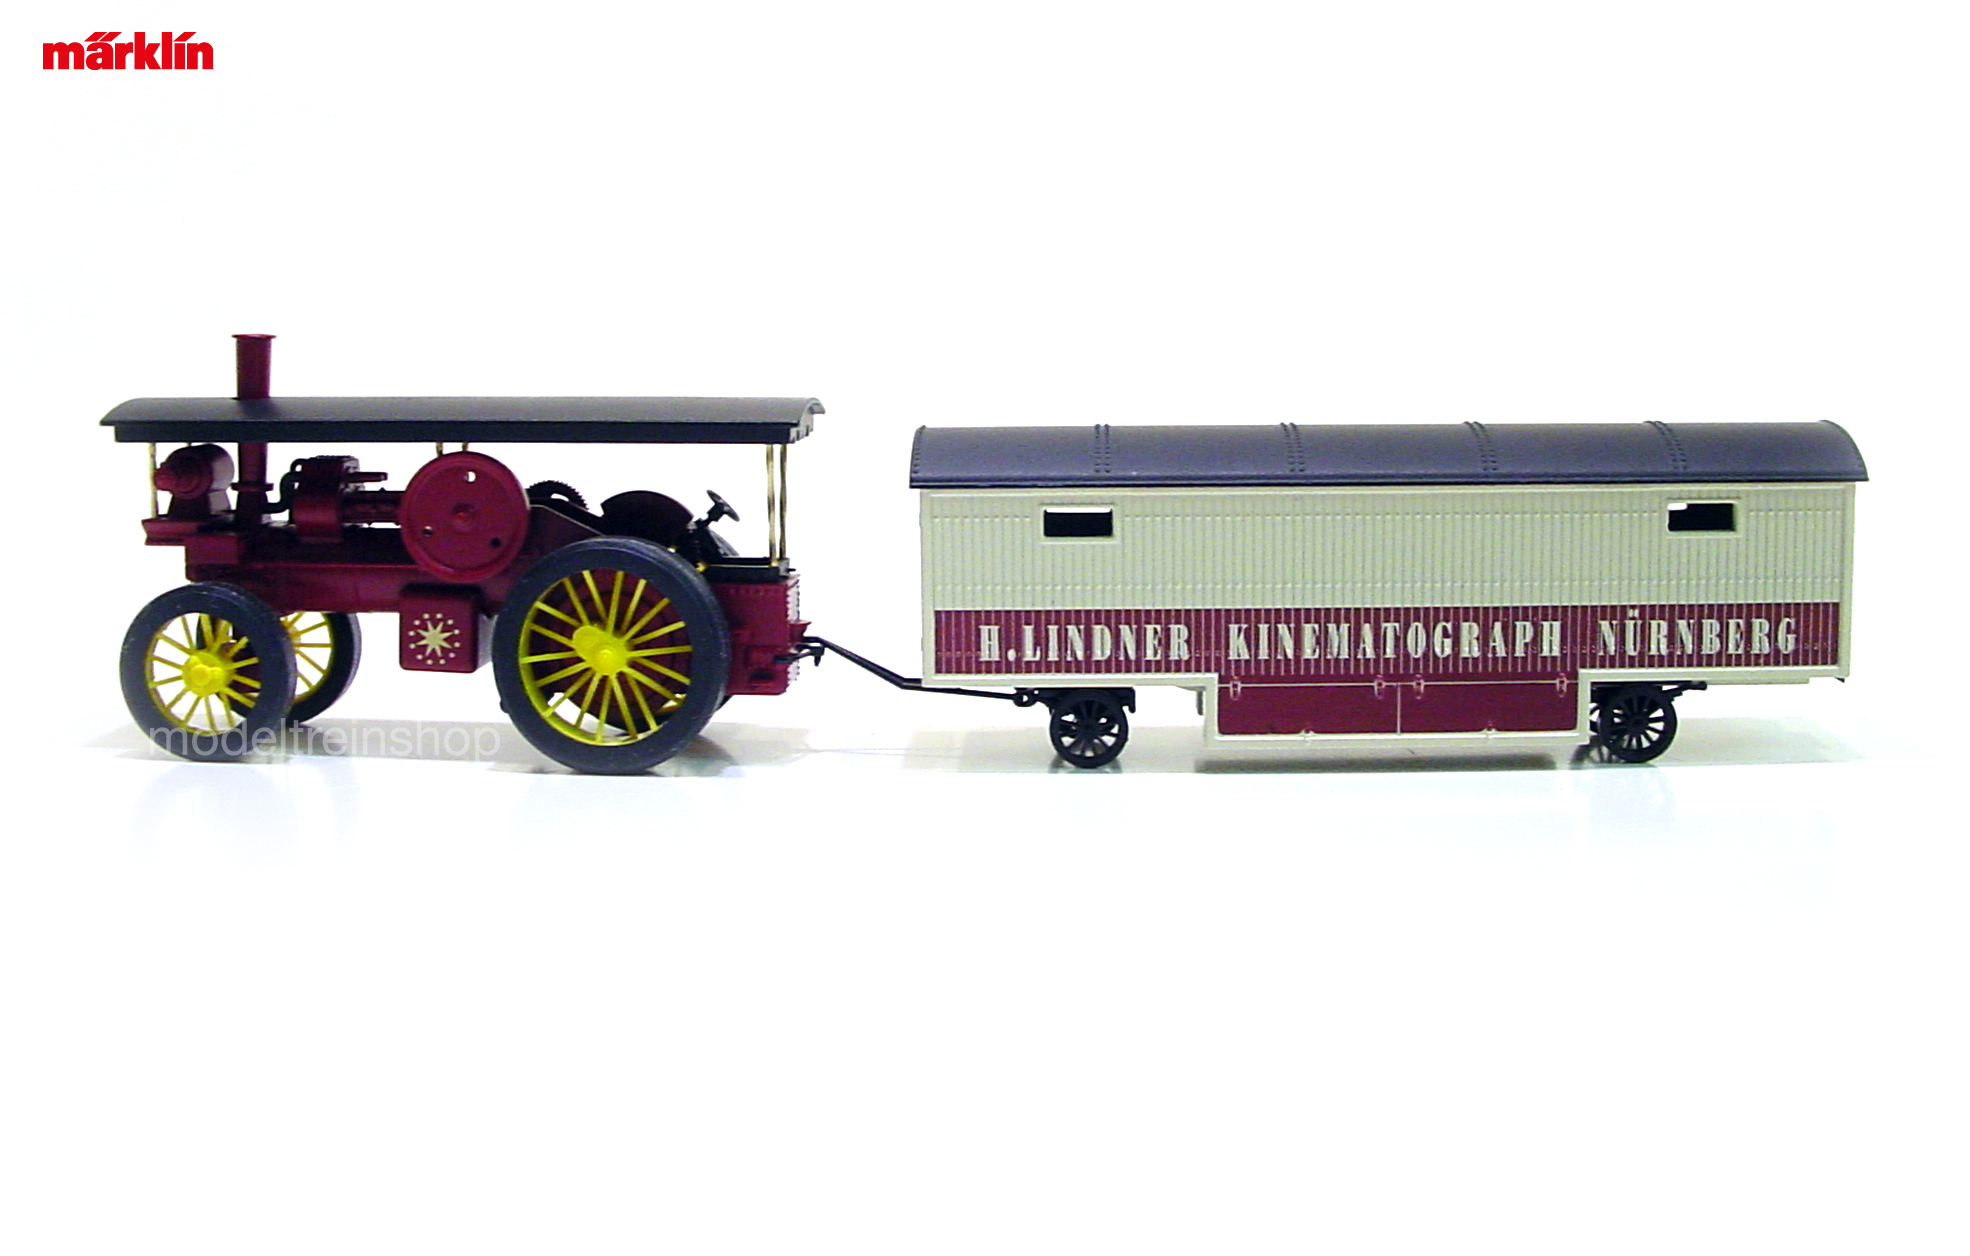 Marklin H0 1887 Dieselmotoren met Kermiswagen H. LINDNER KINEMATOGRAPH NÜRNBERG - Modeltreinshop